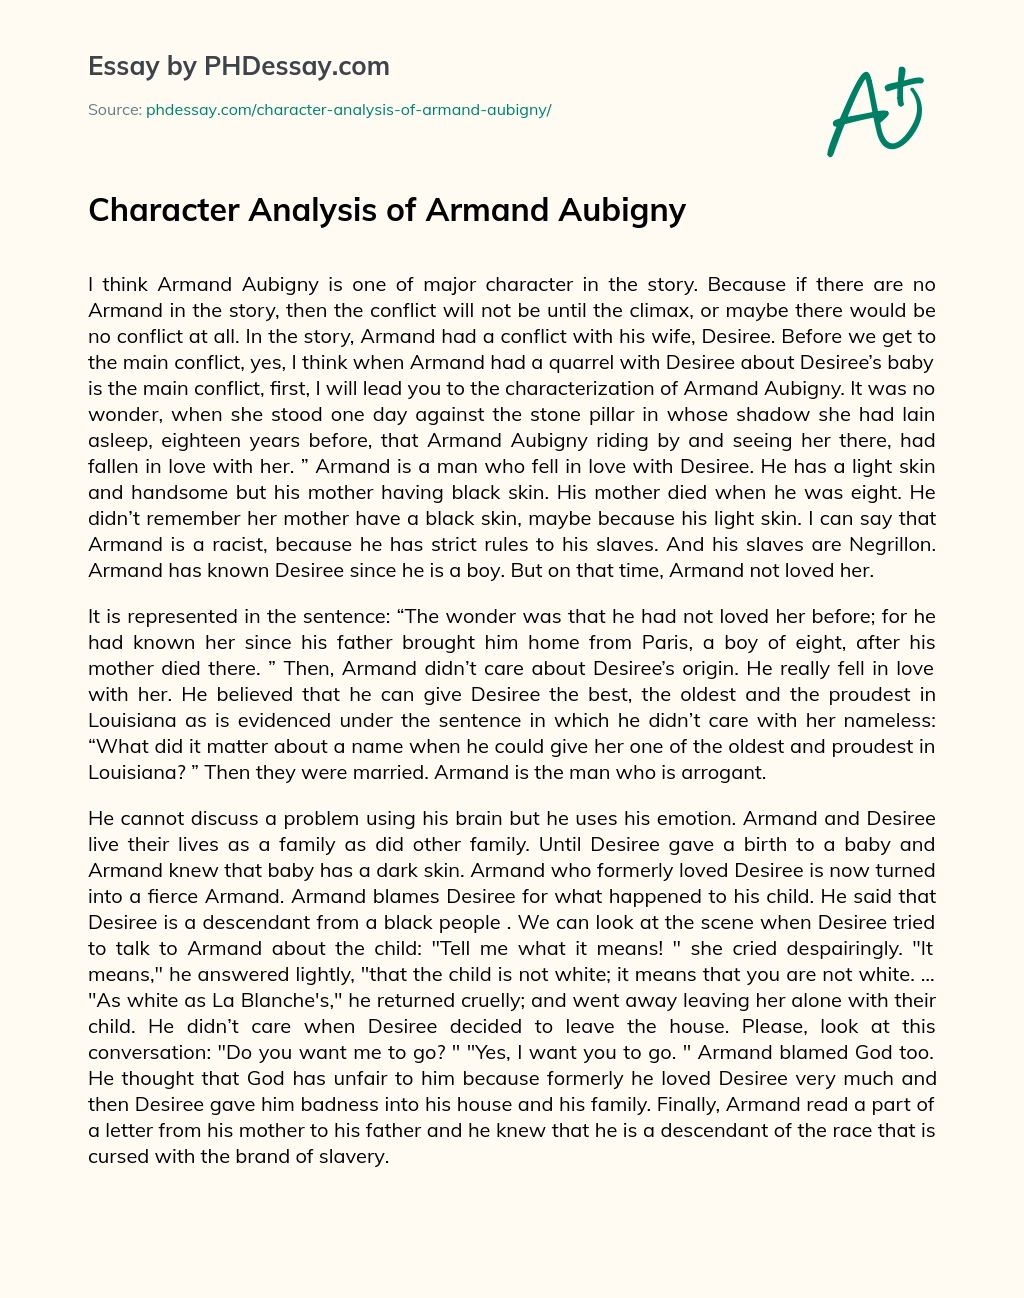 Character Analysis of Armand Aubigny essay